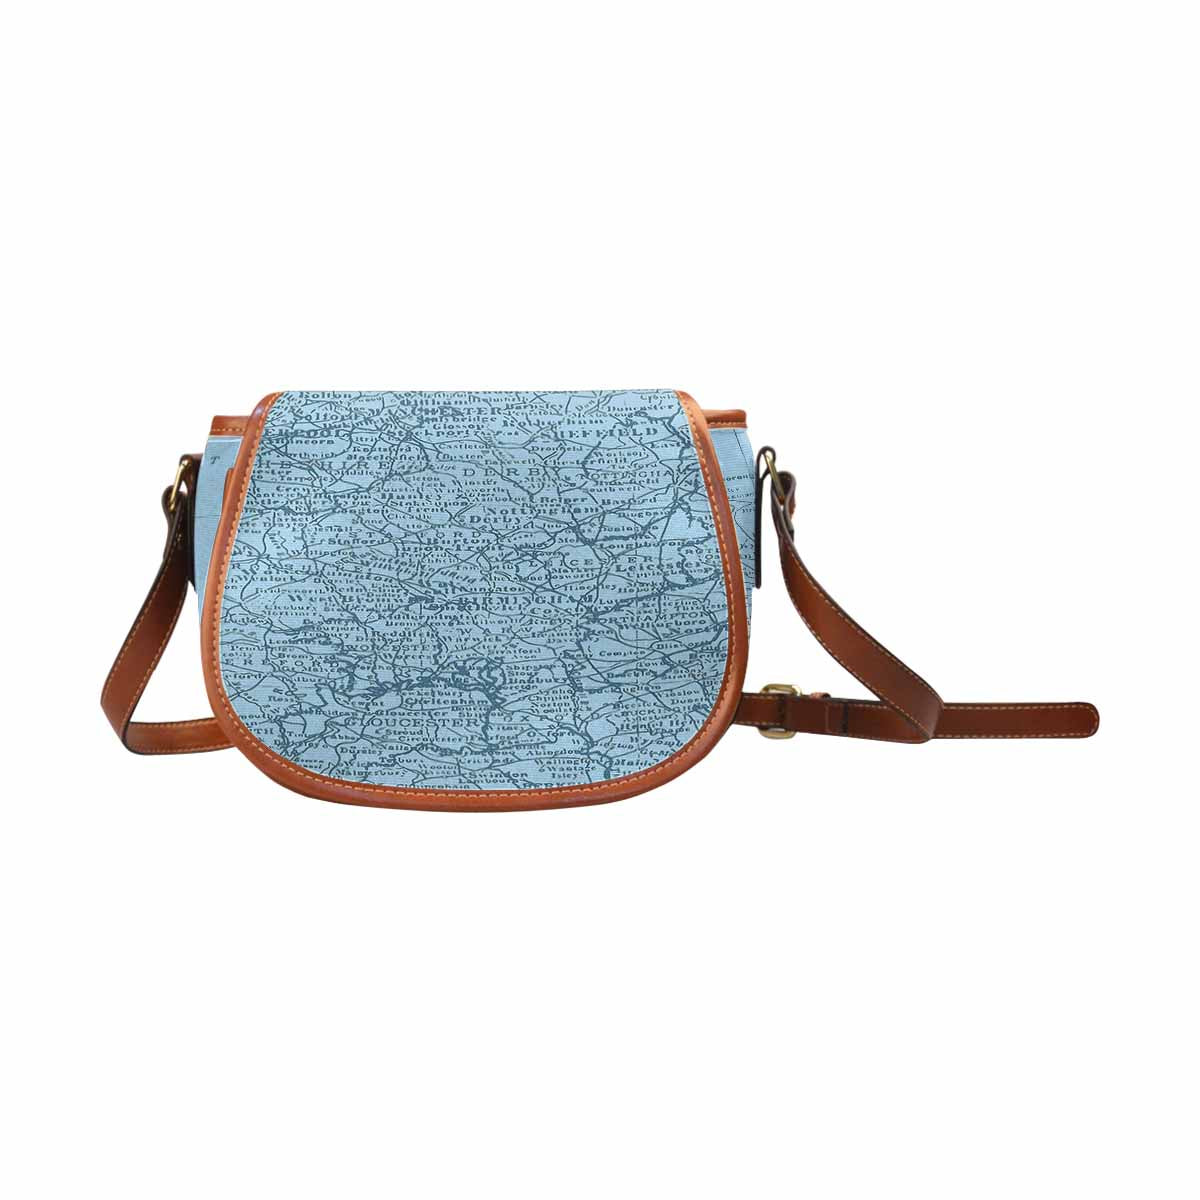 Antique Map design Handbag, saddle bag, Design 50